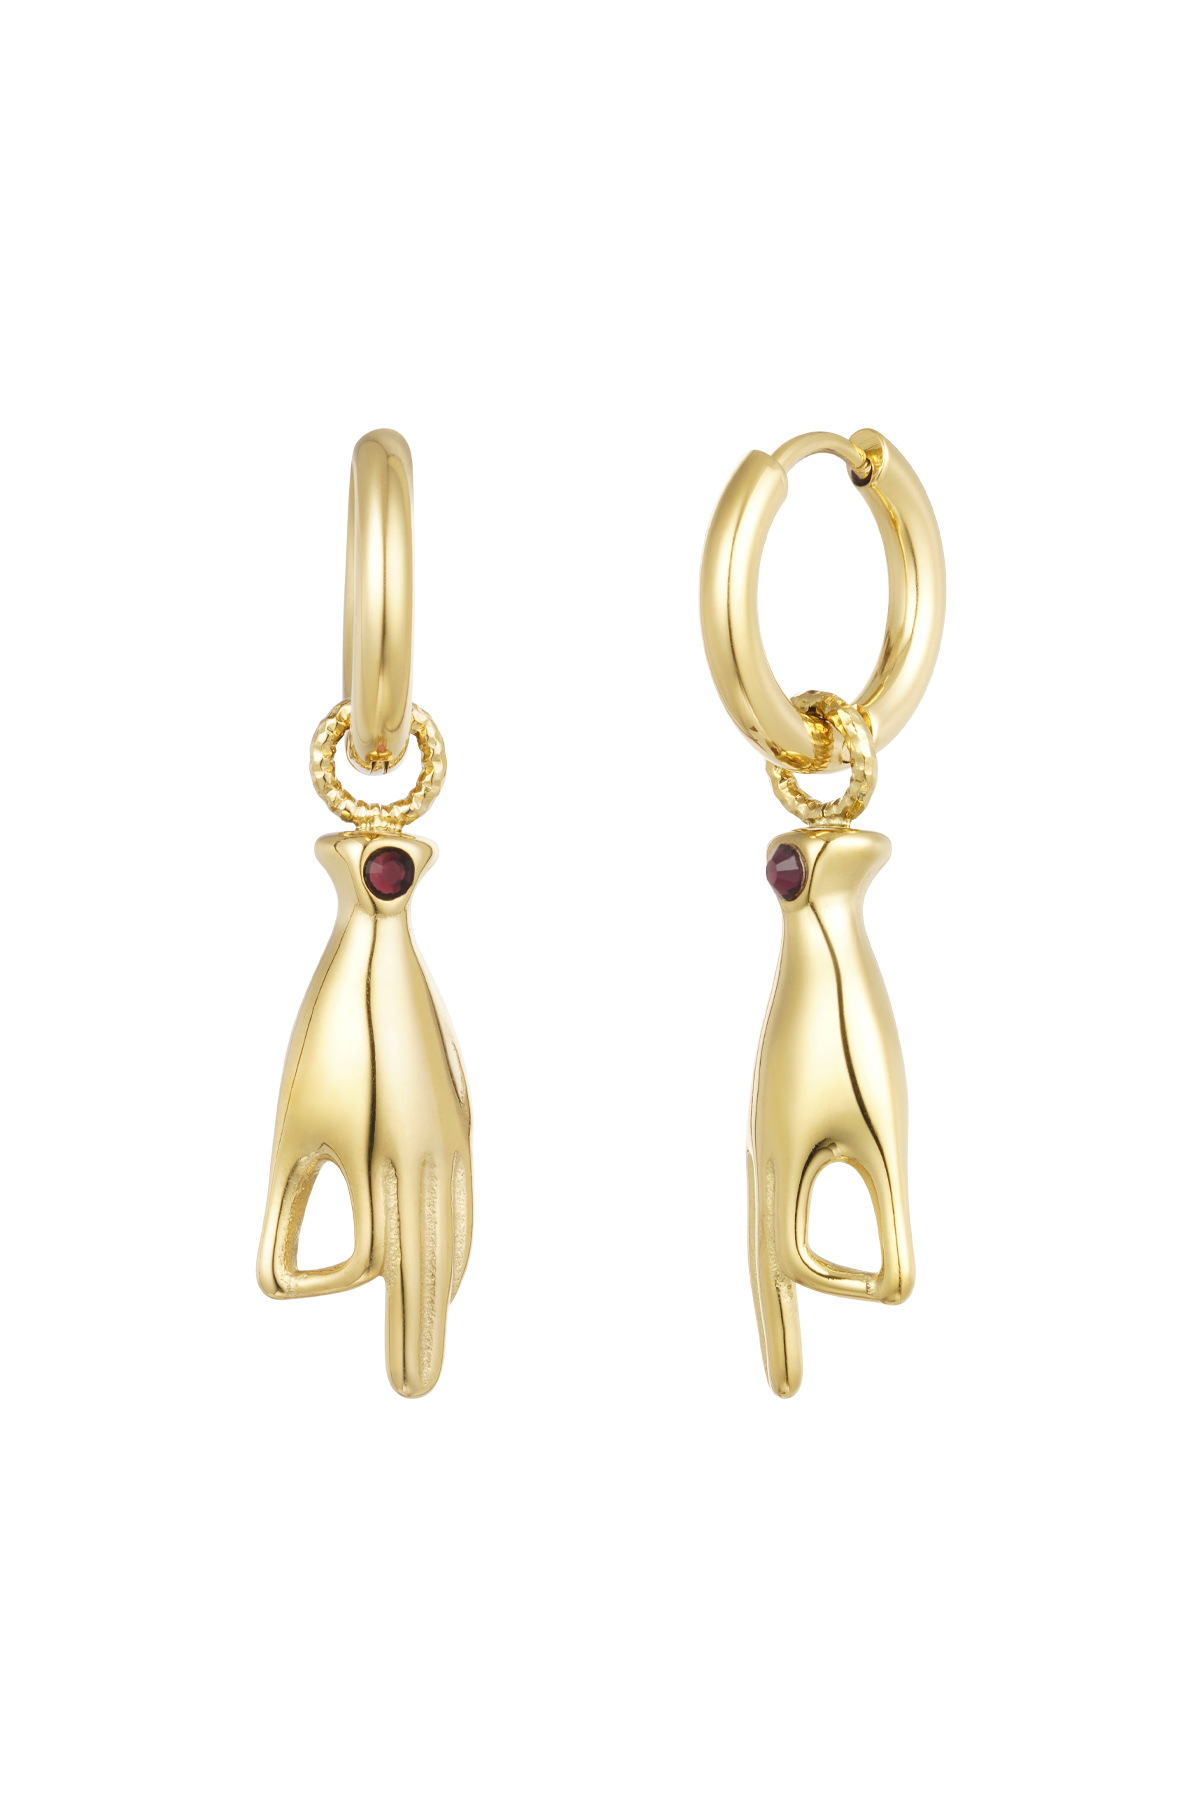 Hand symbol earrings - gold/purple h5 